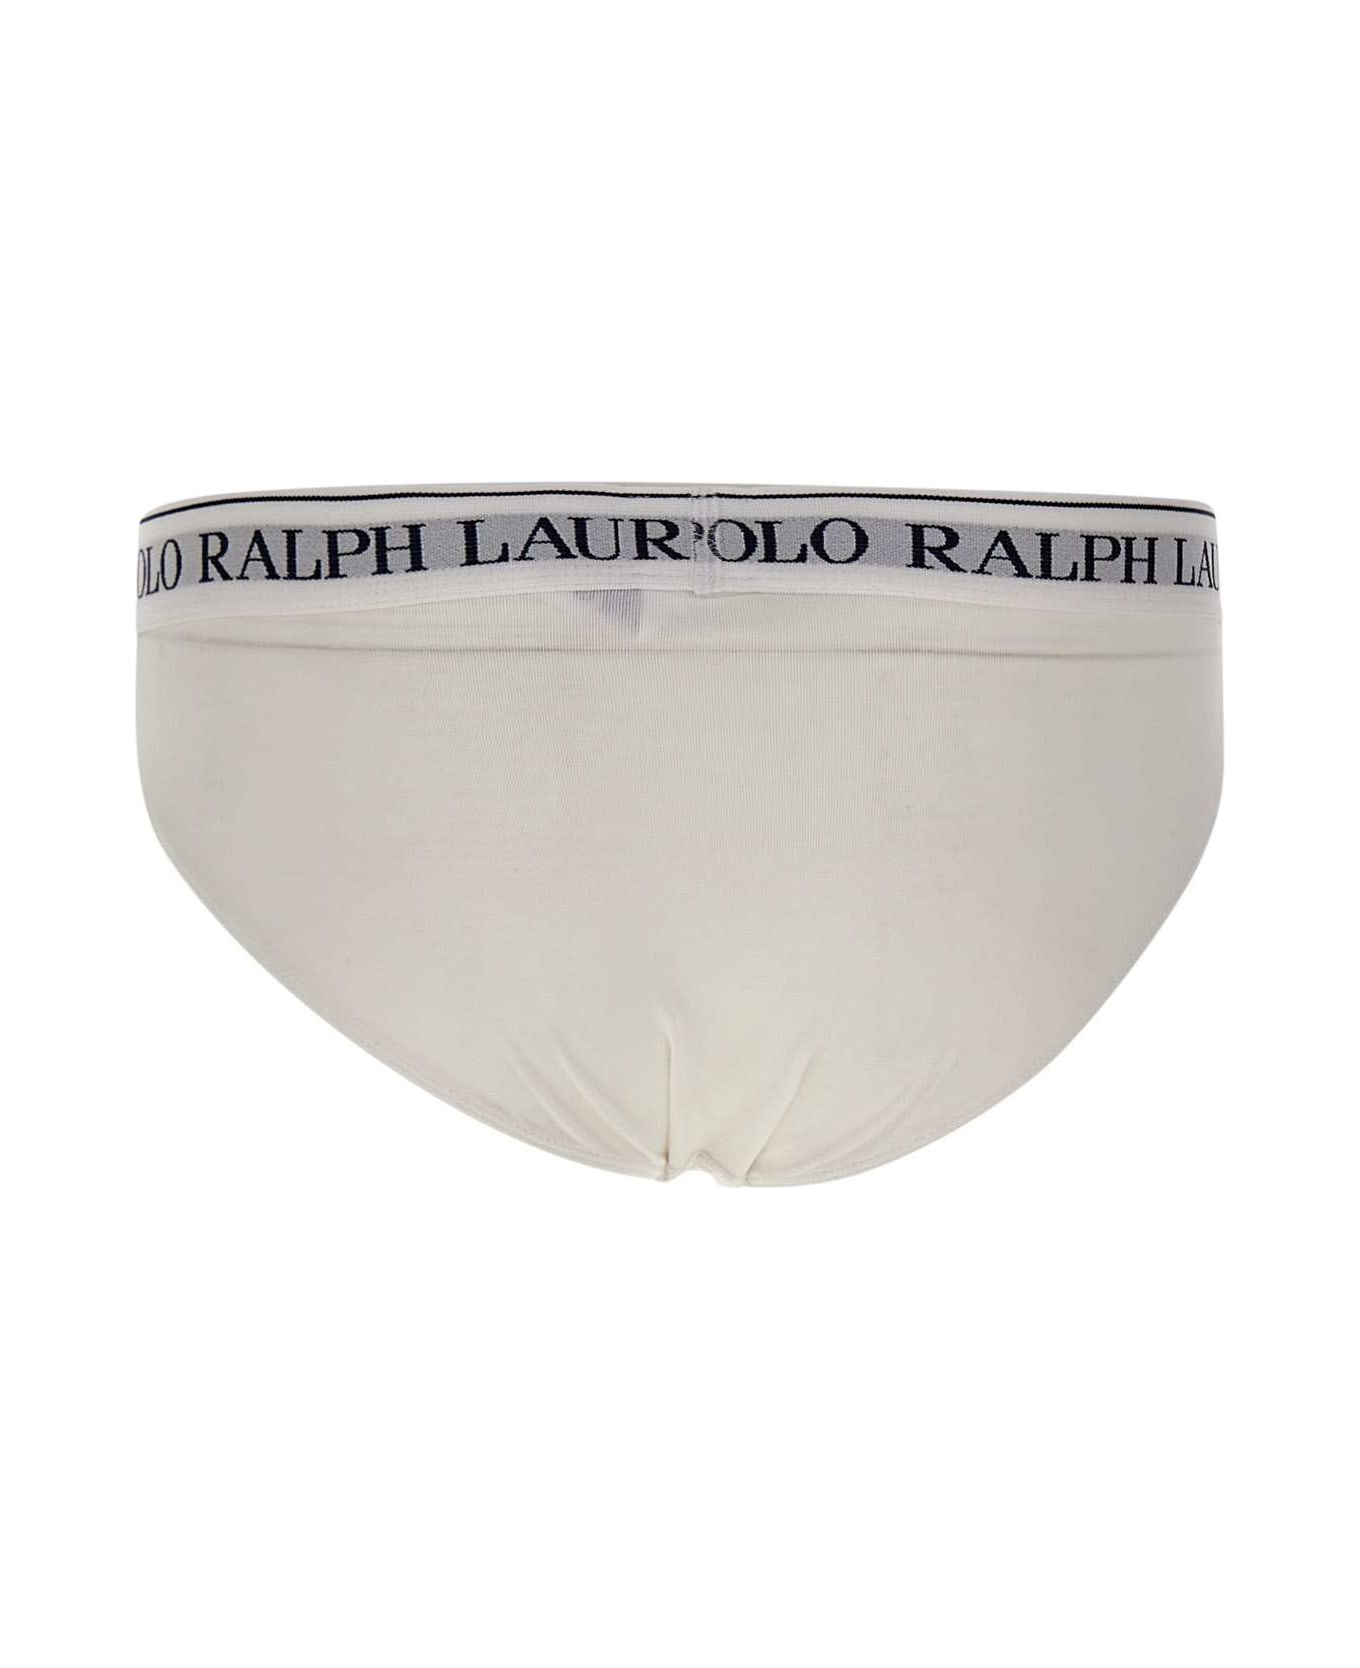 Polo Ralph Lauren 'core Replen' Tripack Briefs - WHITE ショーツ